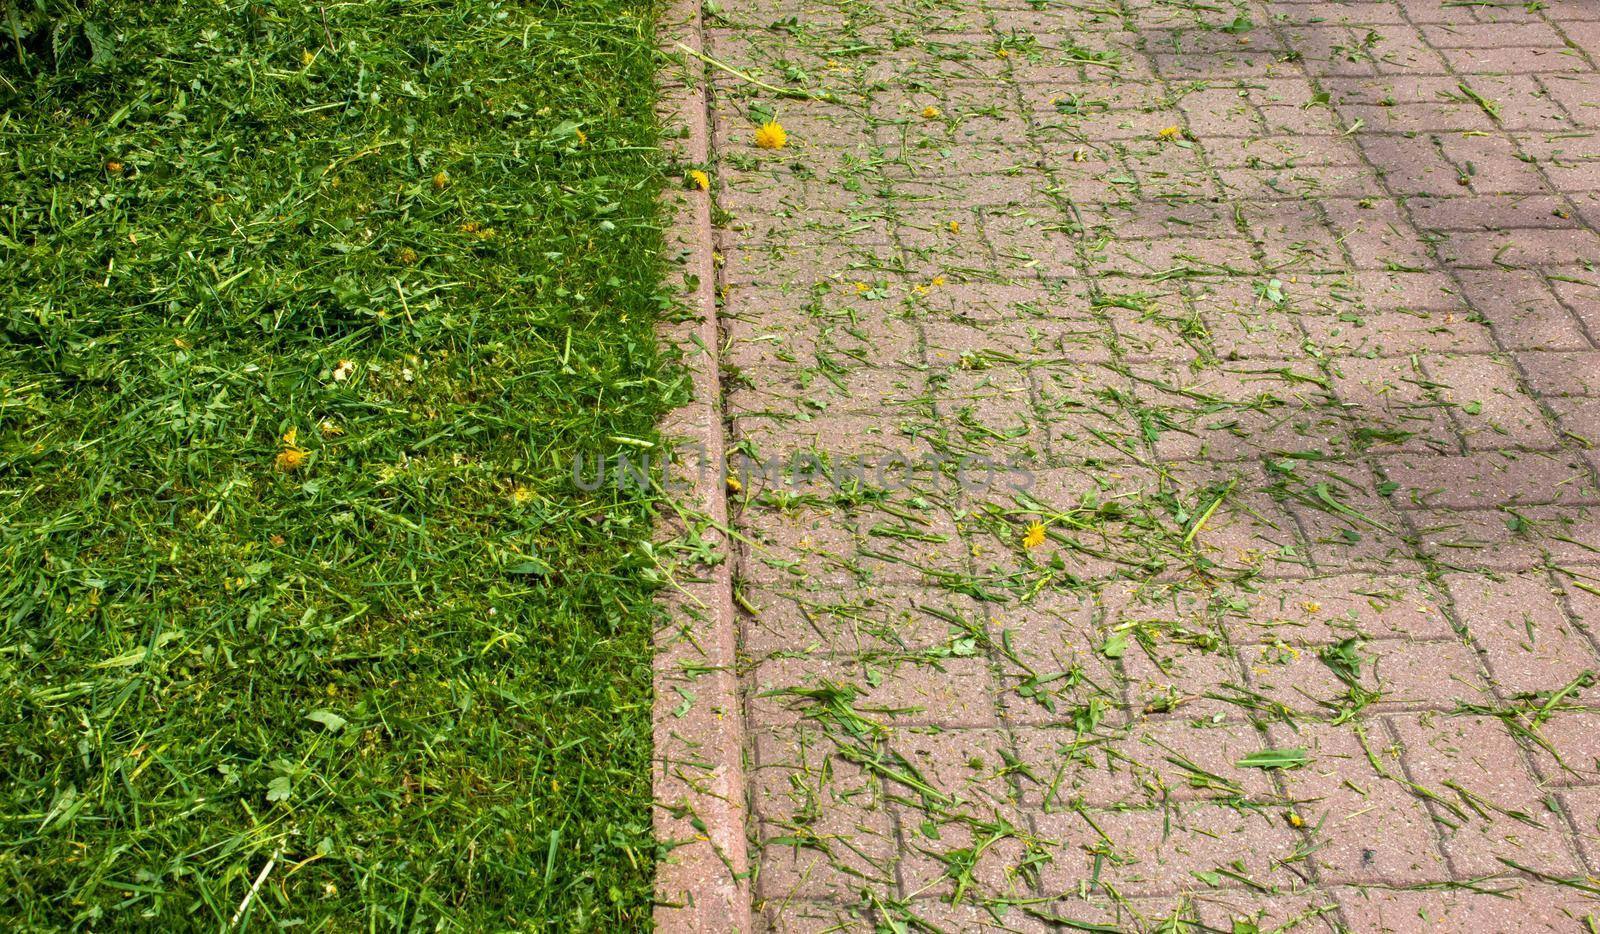 Mown fresh grass on the lawn and sidewalk by lapushka62